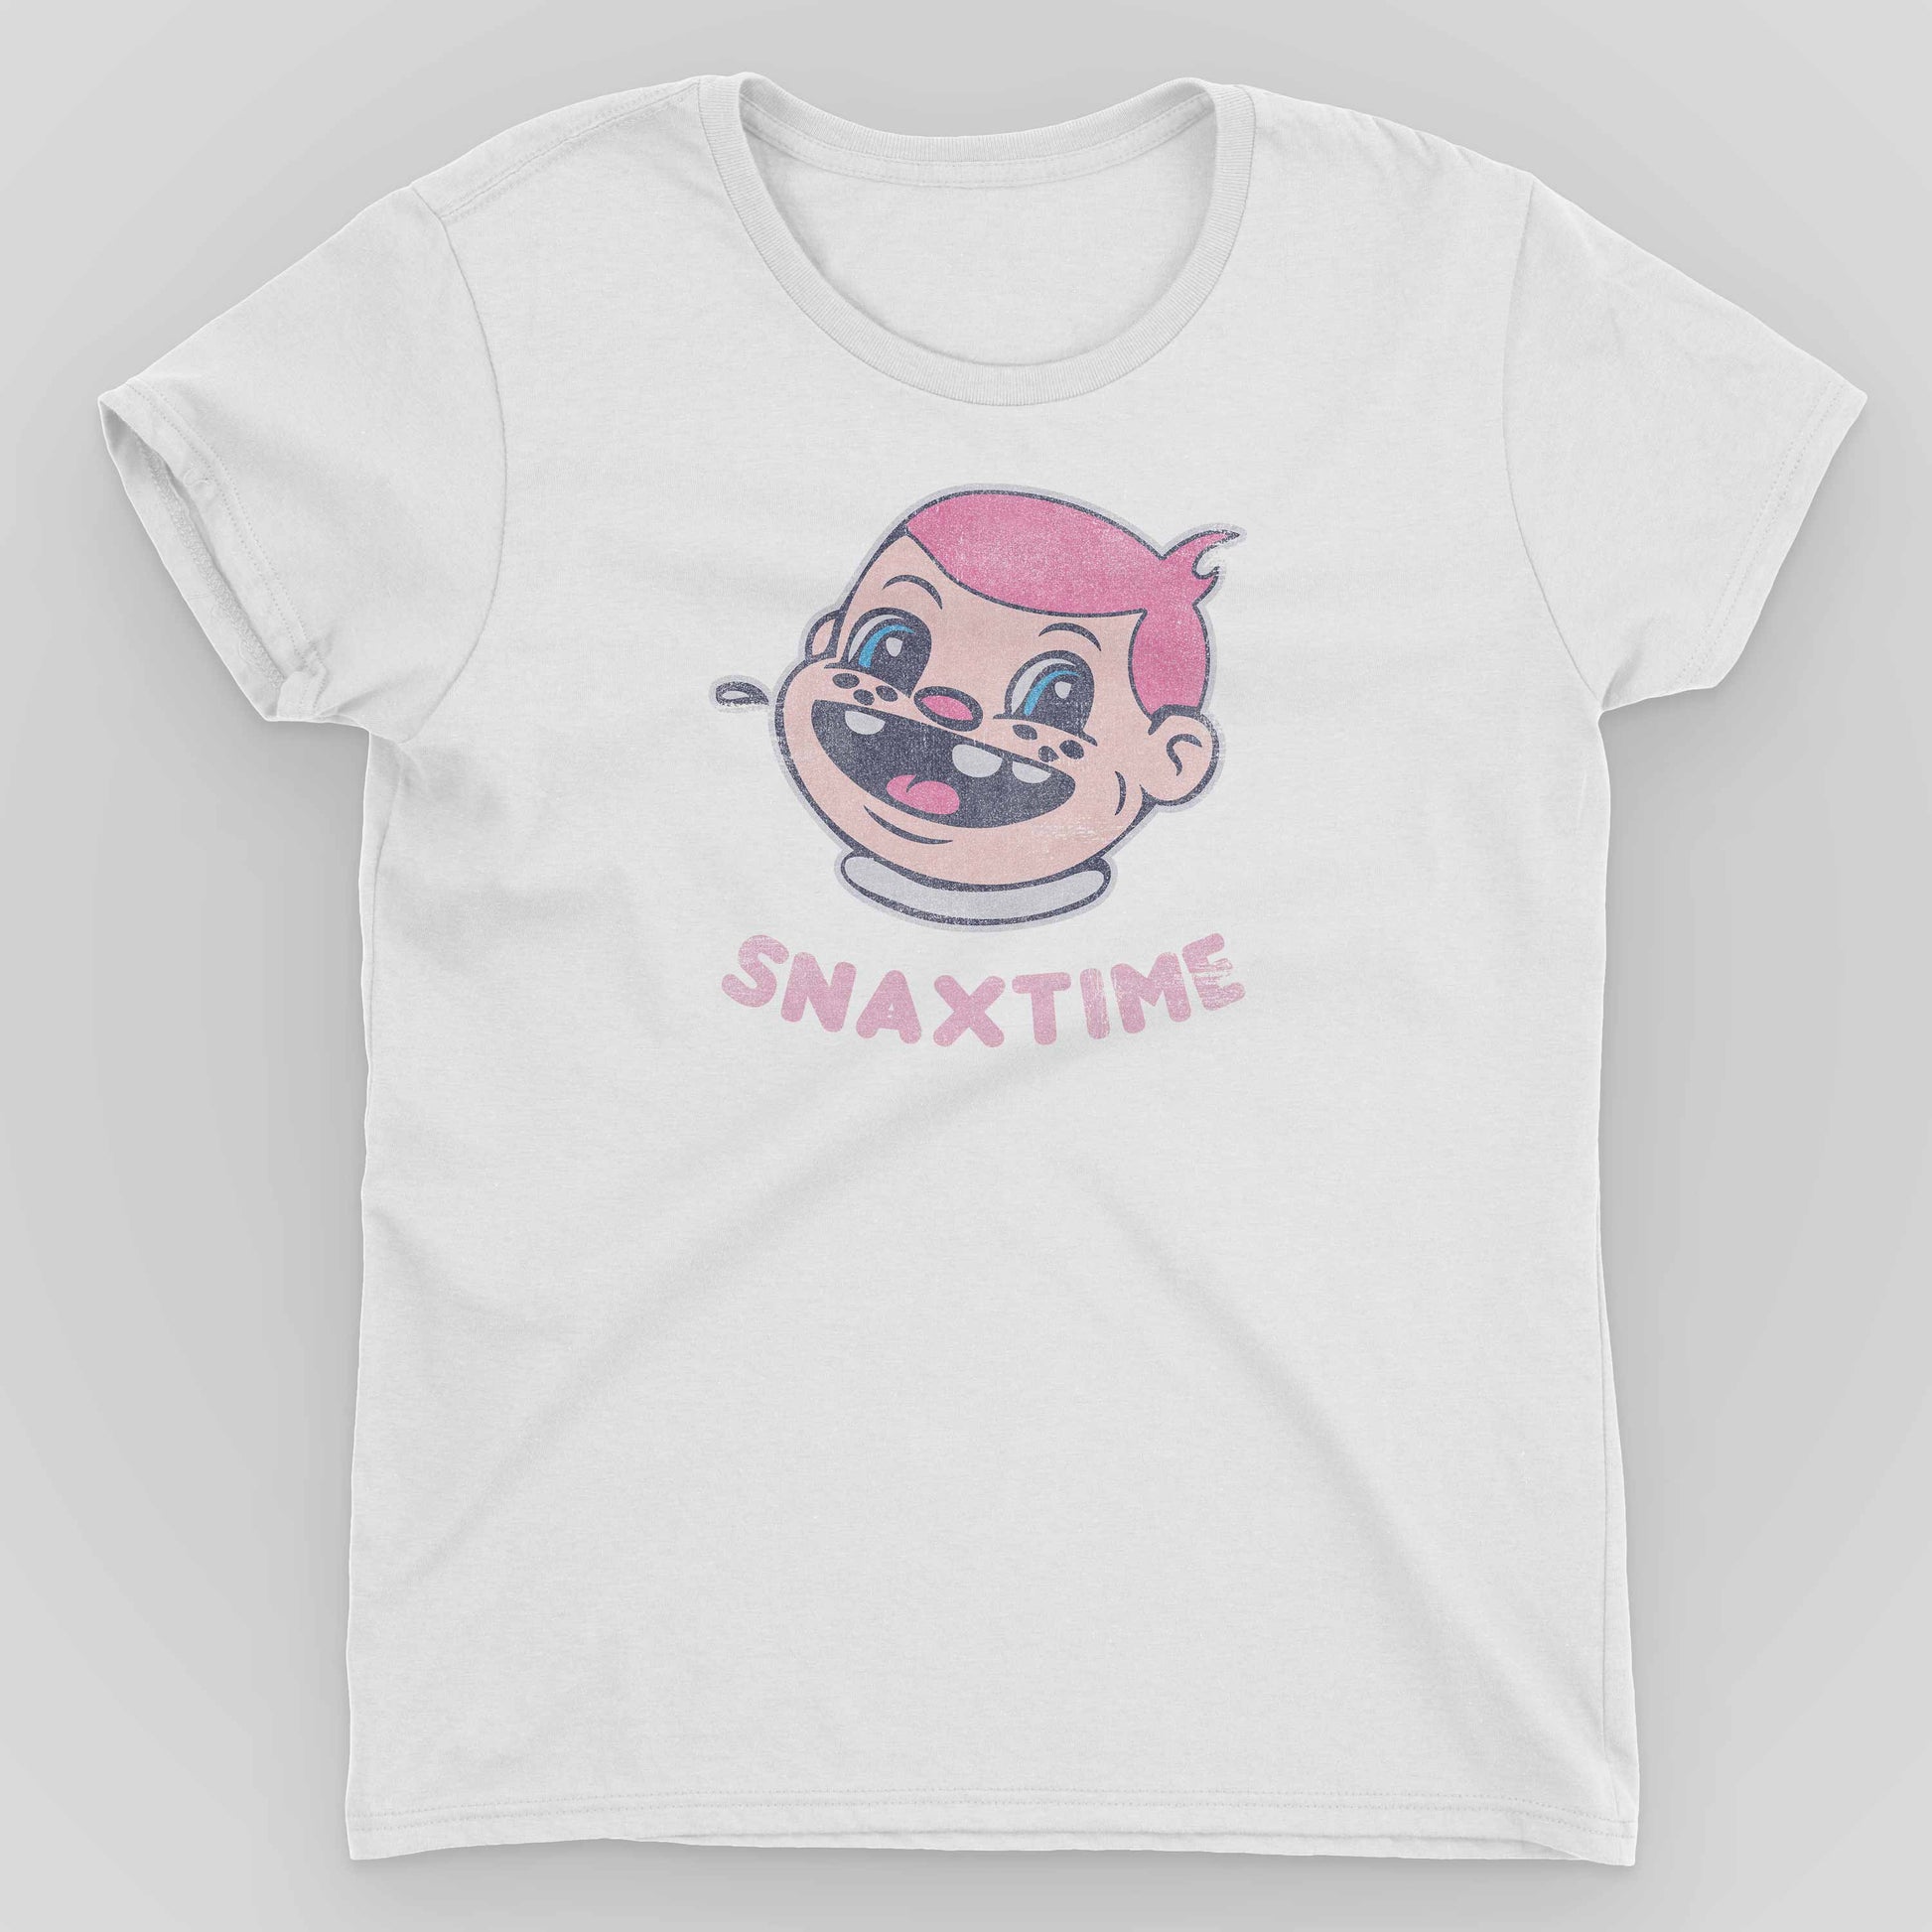 White Snaxtime Original Women's Graphic T-Shirt by Snaxtime